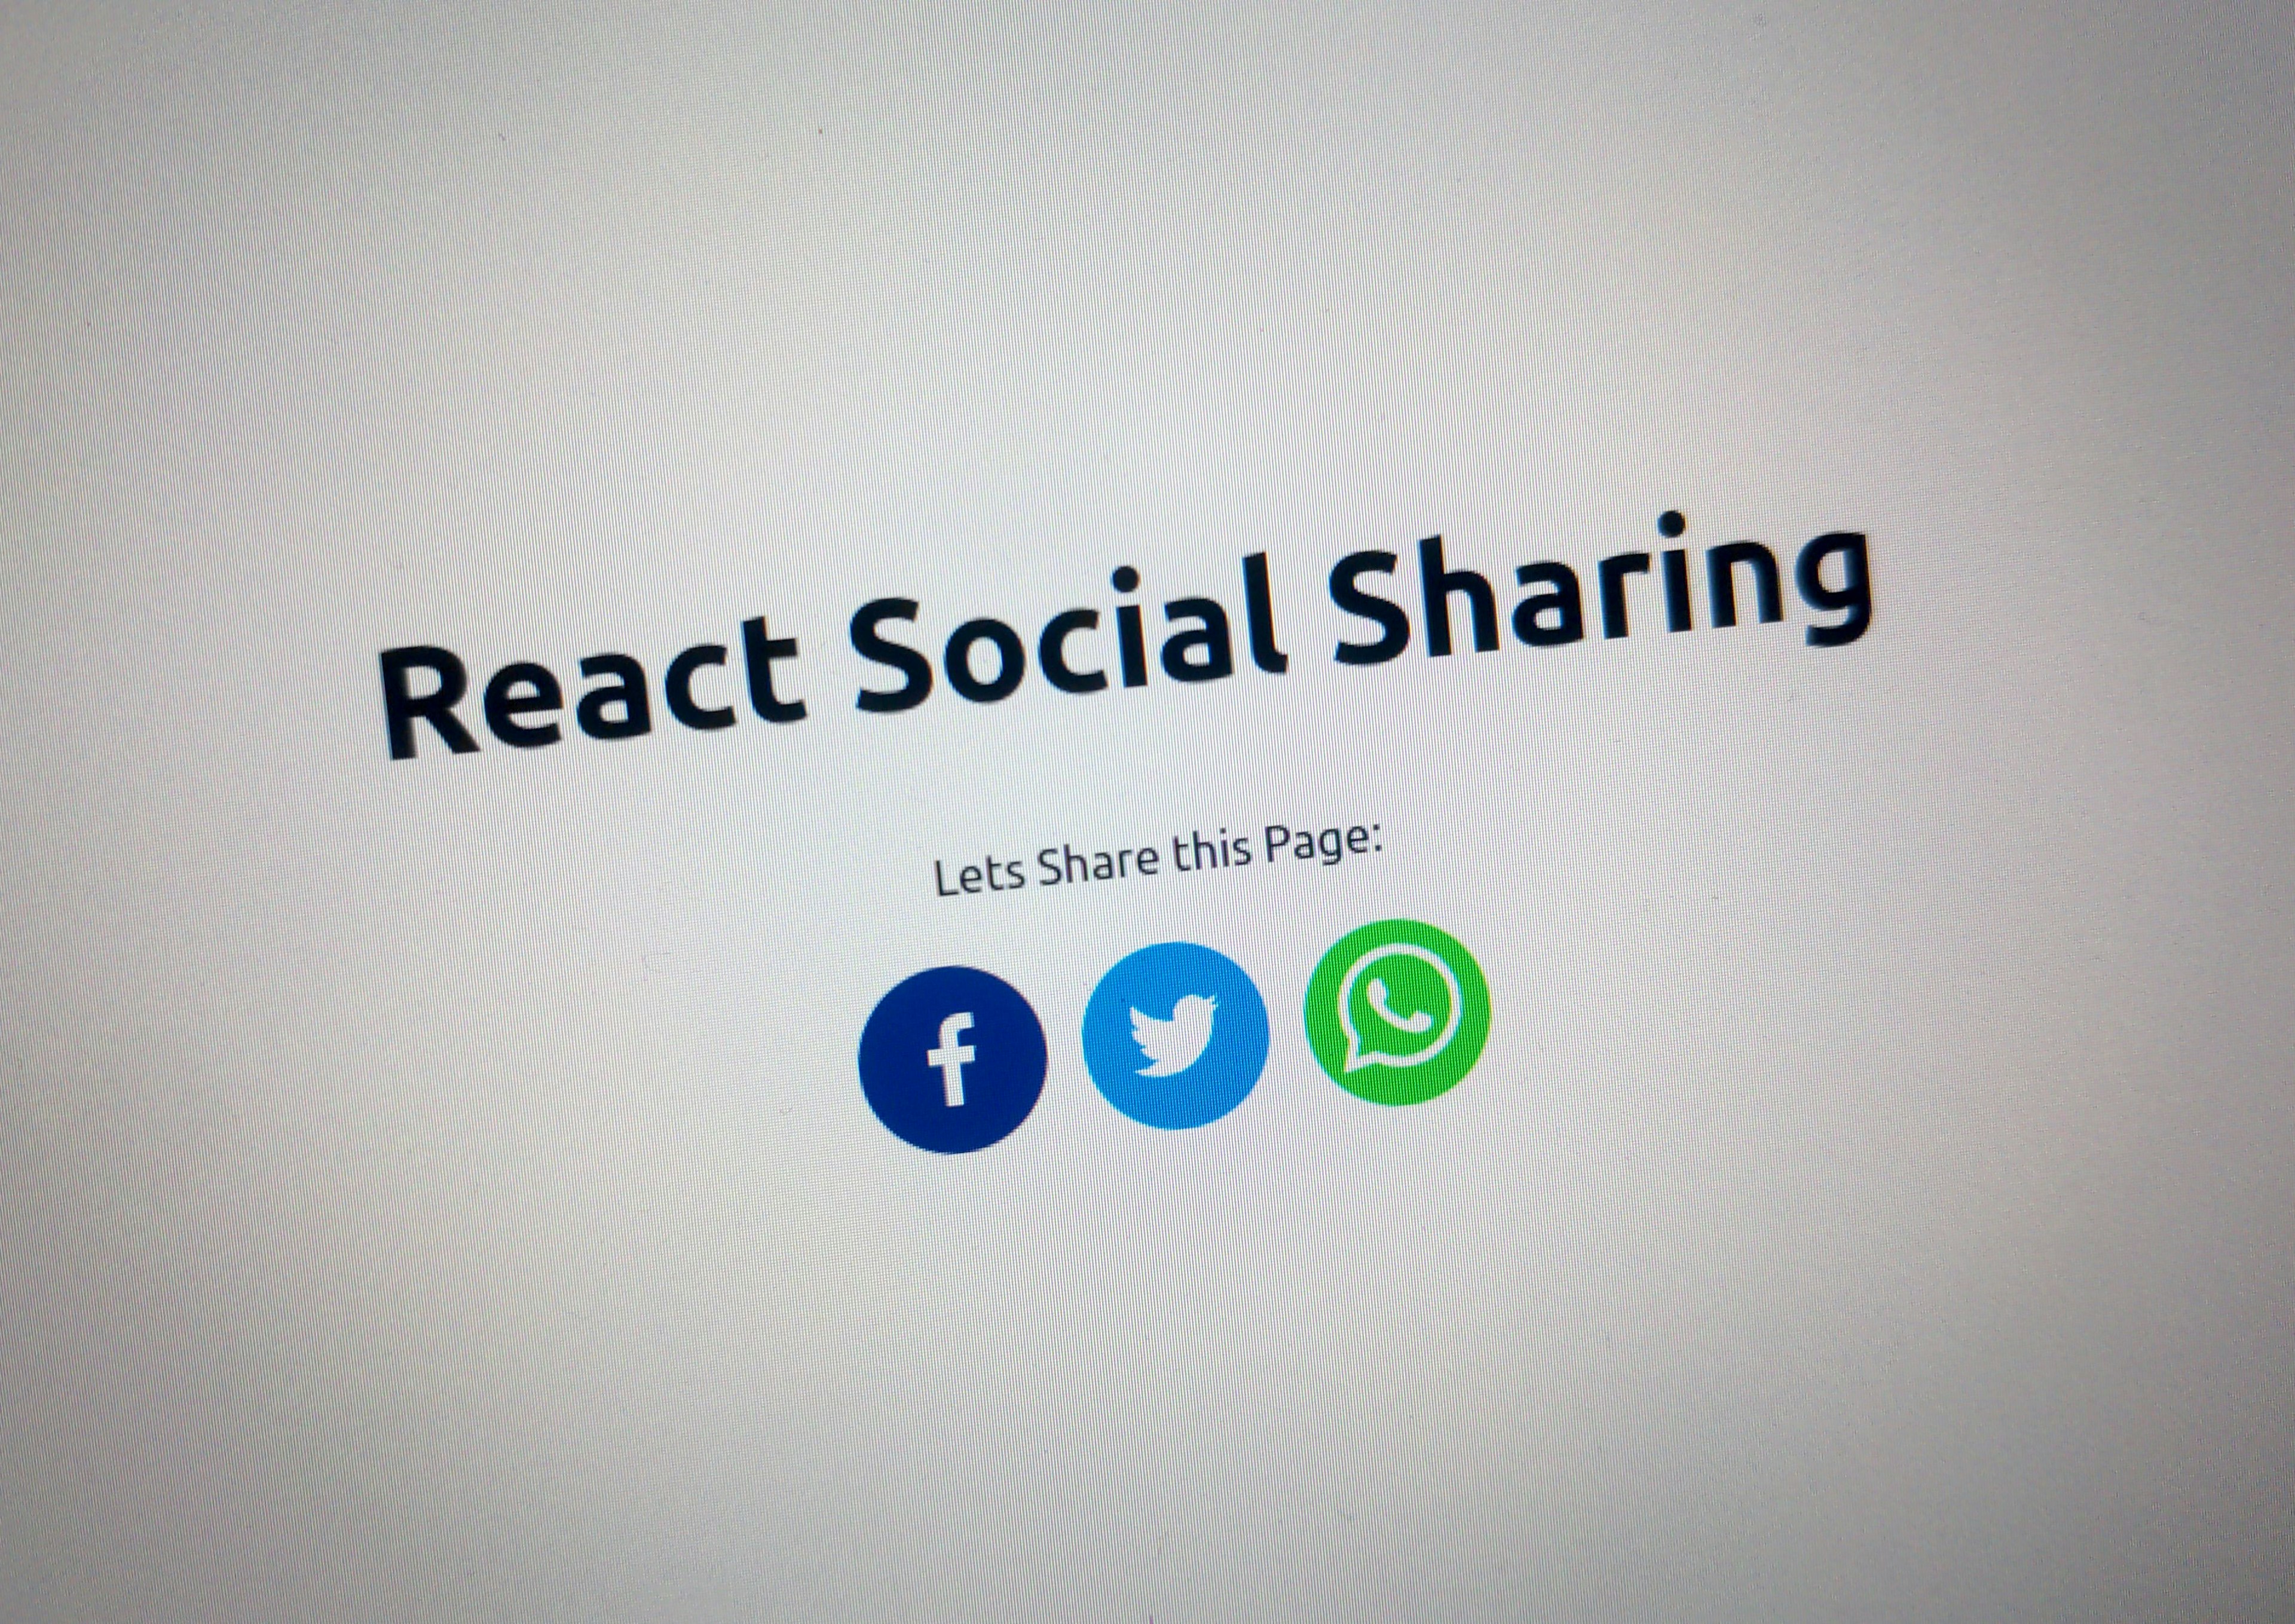 React Social Sharing Title Image